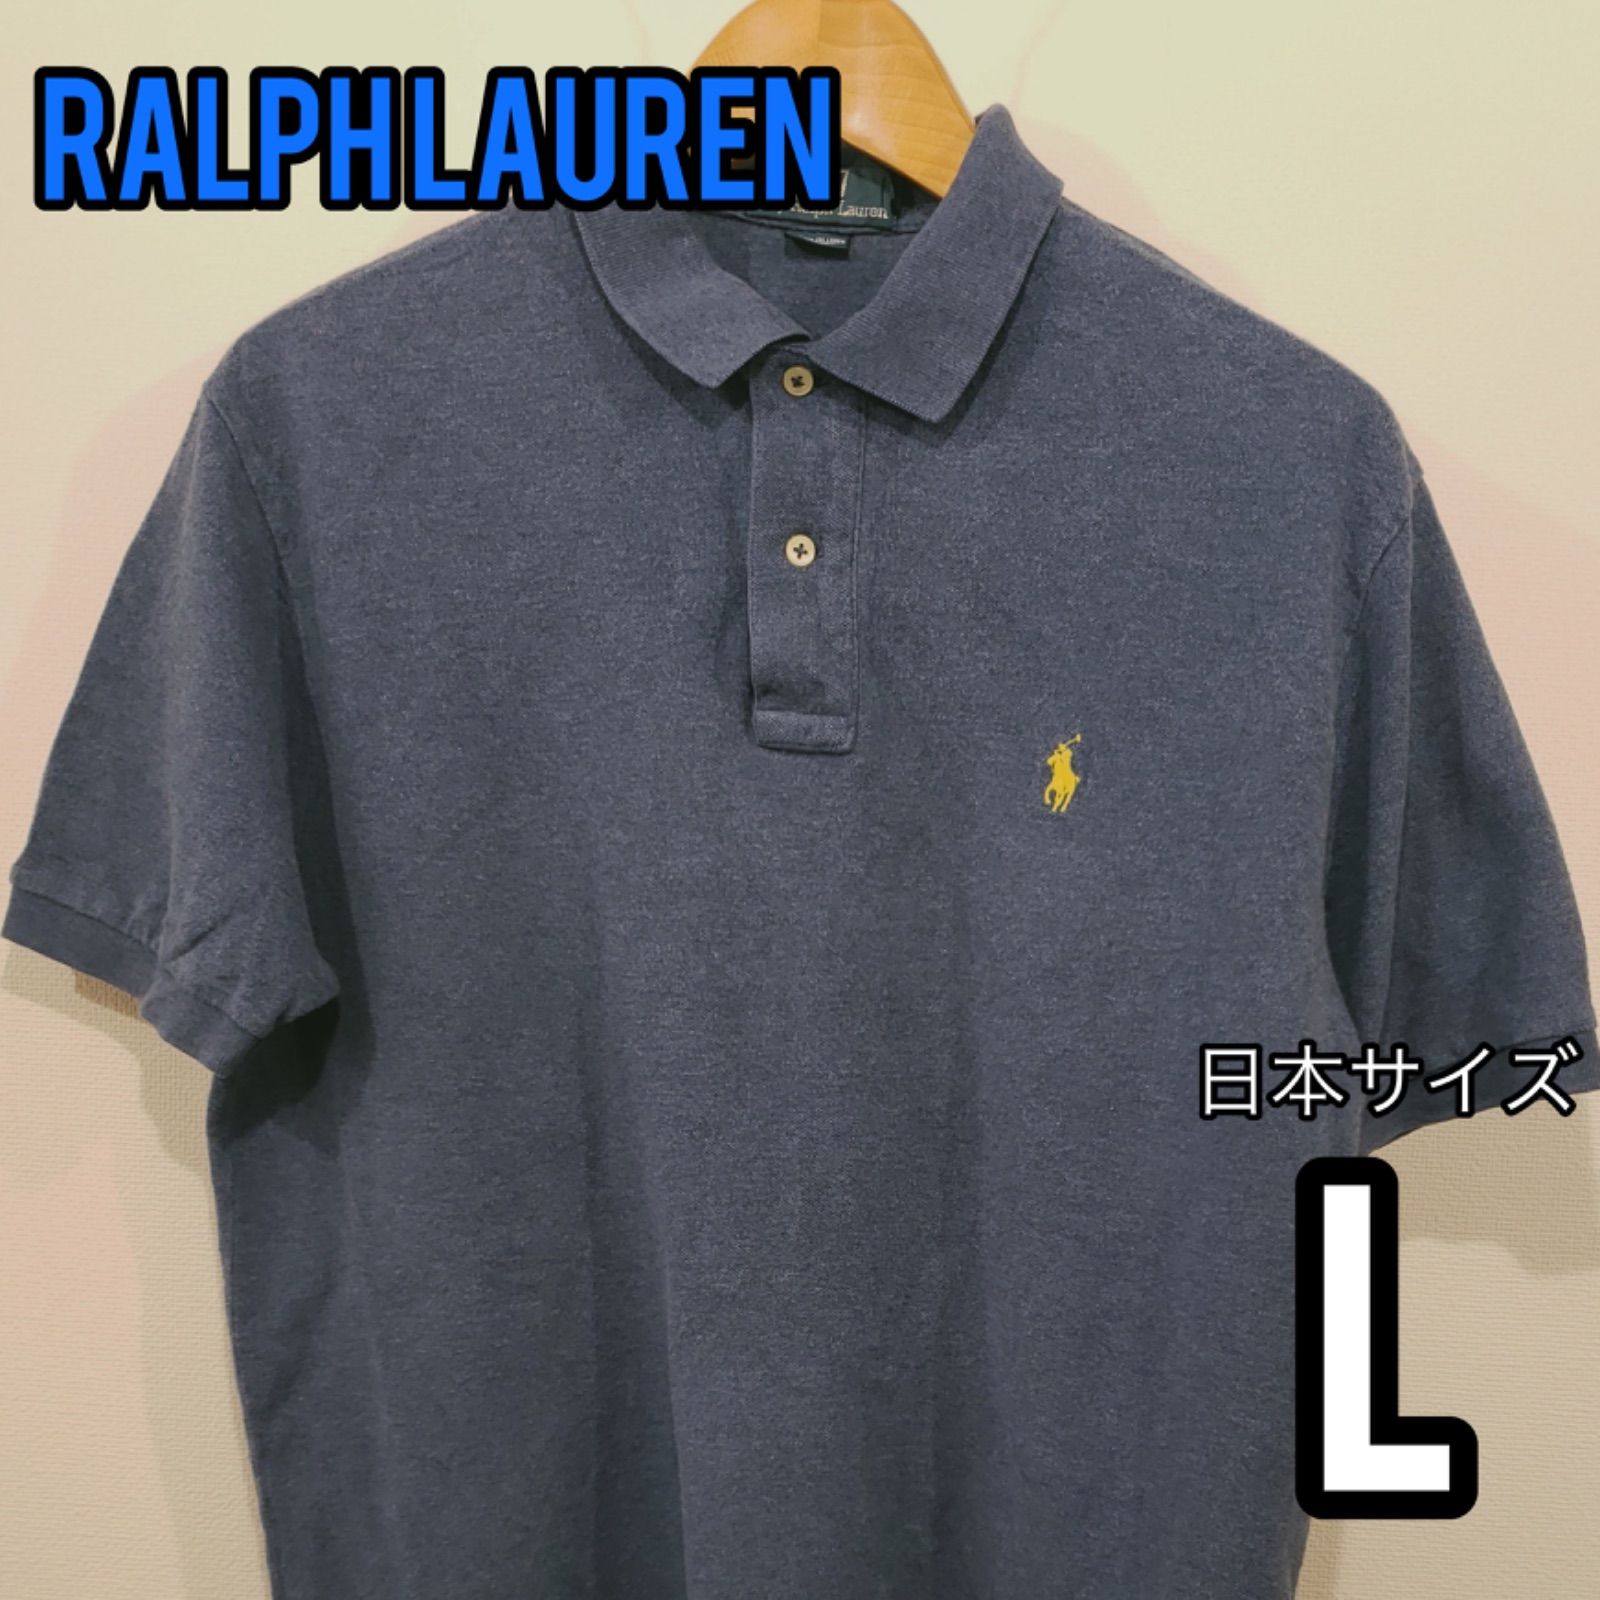 Ralph Lauren ポロシャツ 紺 ≪44P4≫ - メルカリ